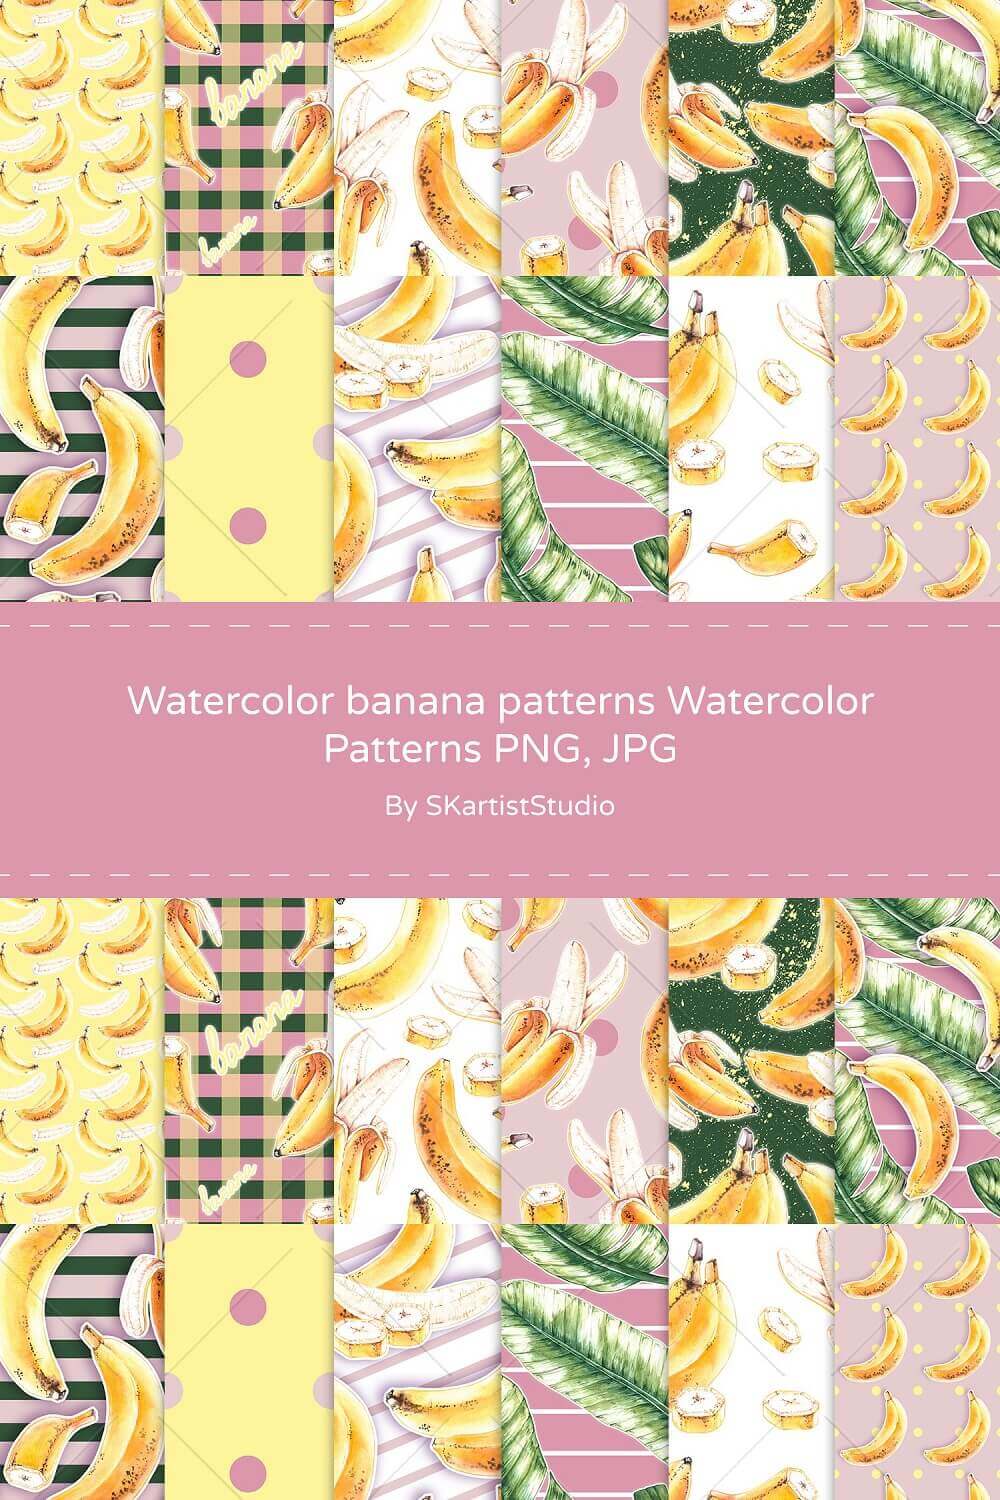 Watercolor patterns PNG, JPG.